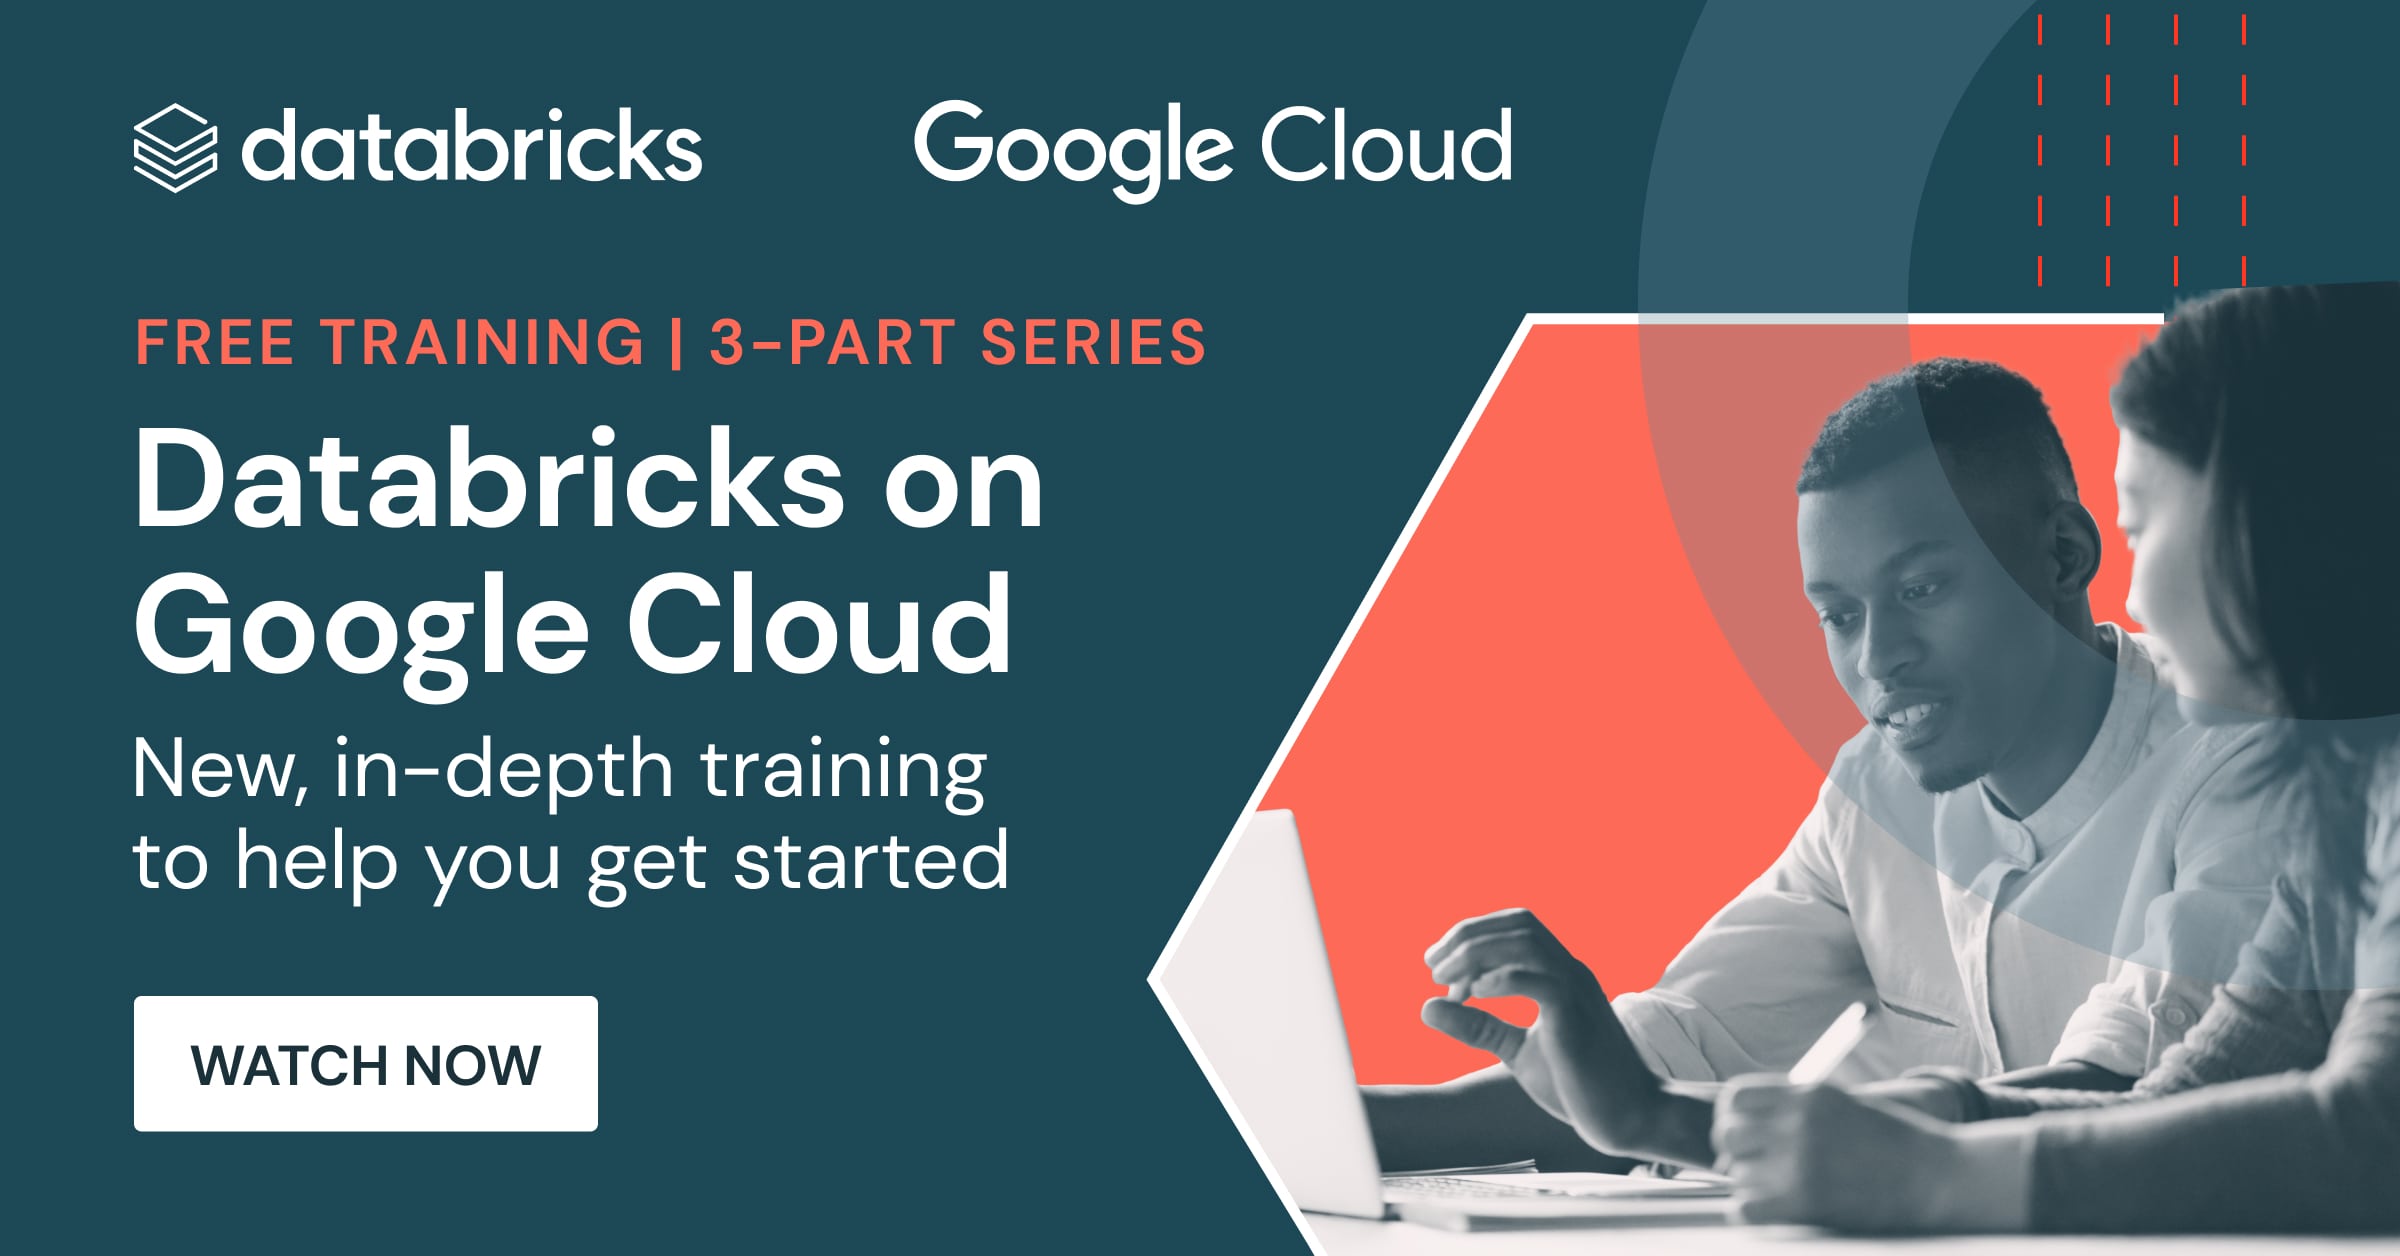 Click here to get free Databricks Training on Google Cloud